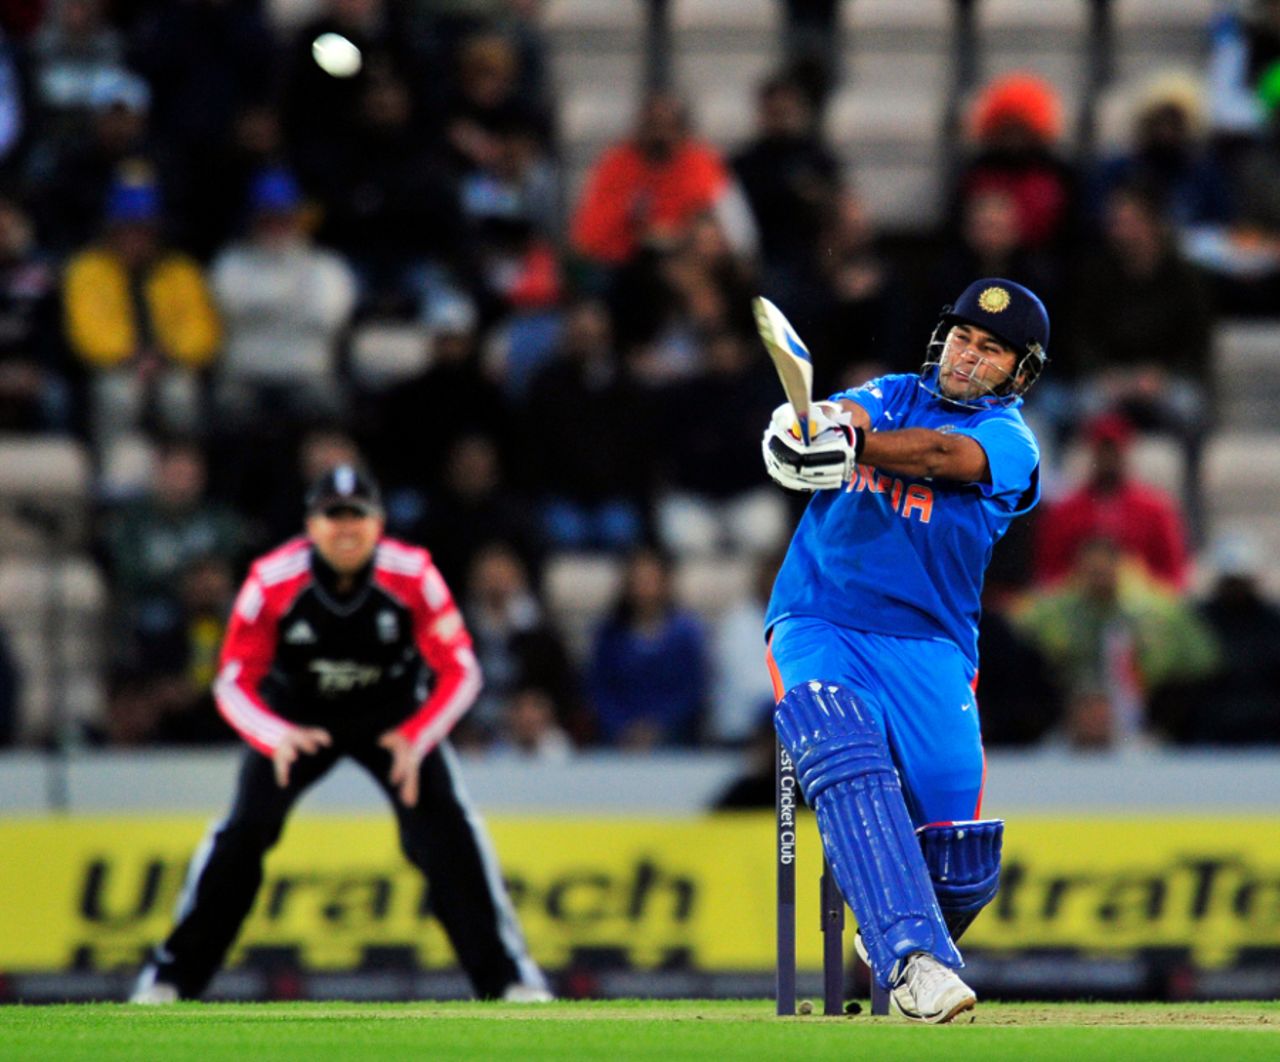 Parthiv Patel ensured India got off to a quick start, England v India, 2nd ODI, Rose Bowl, September 6 2011